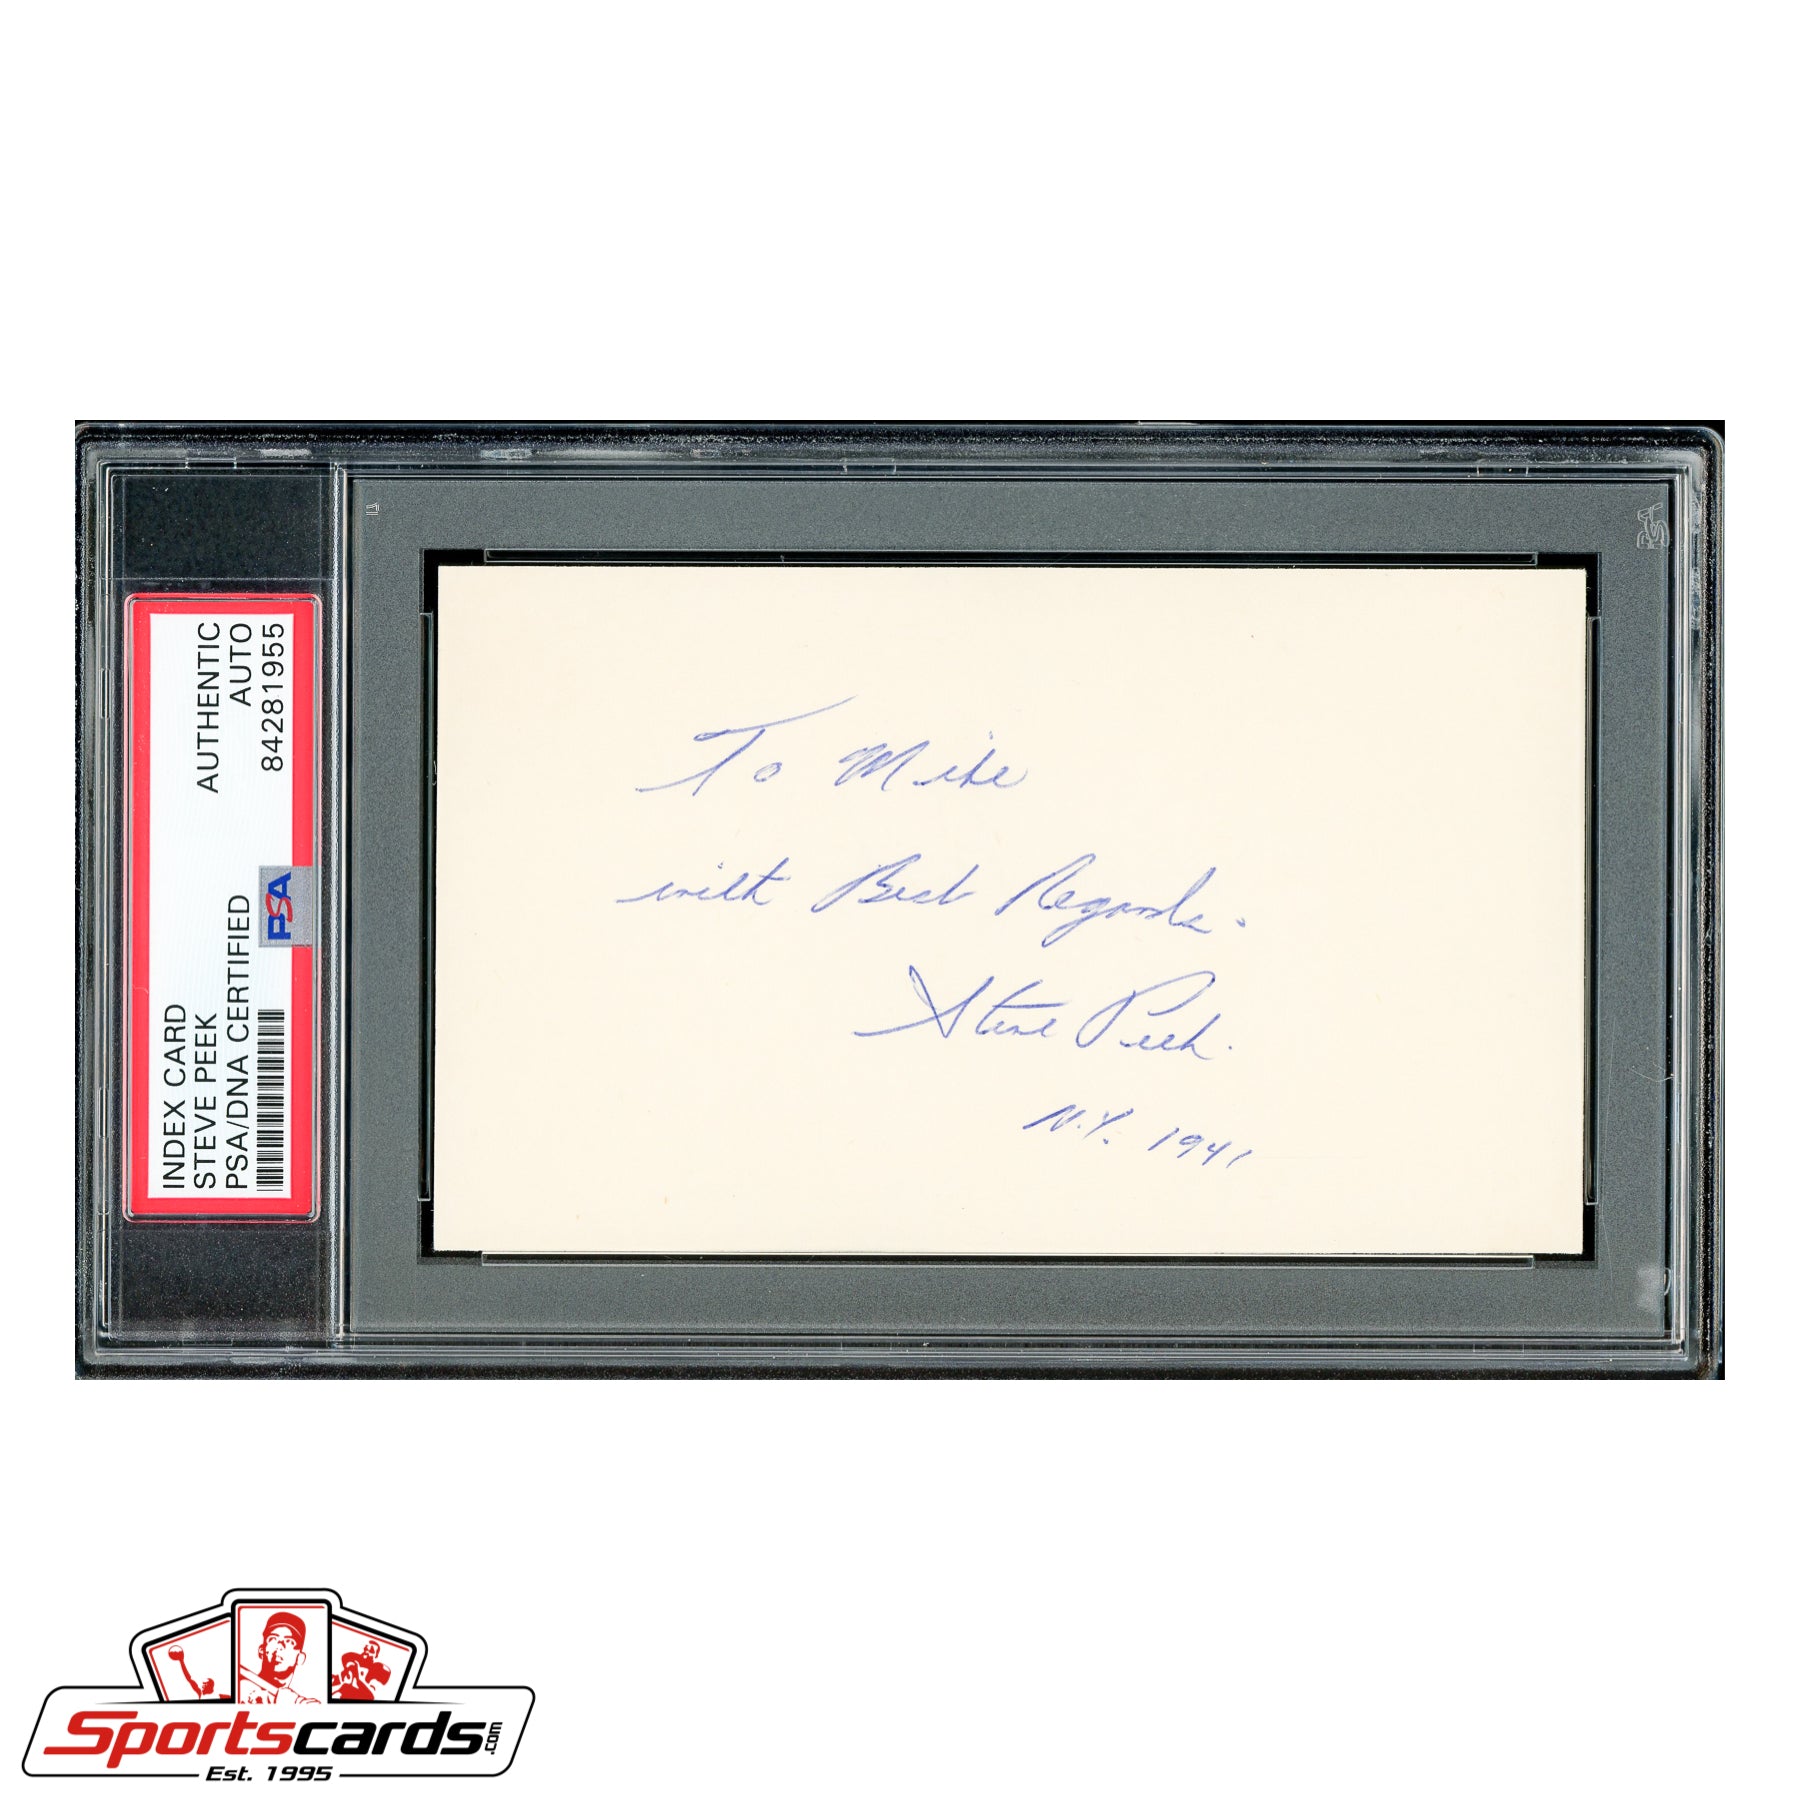 Steve Peek (1941 Yankees) Signed Auto 3x5 Index Card - PSA/DNA